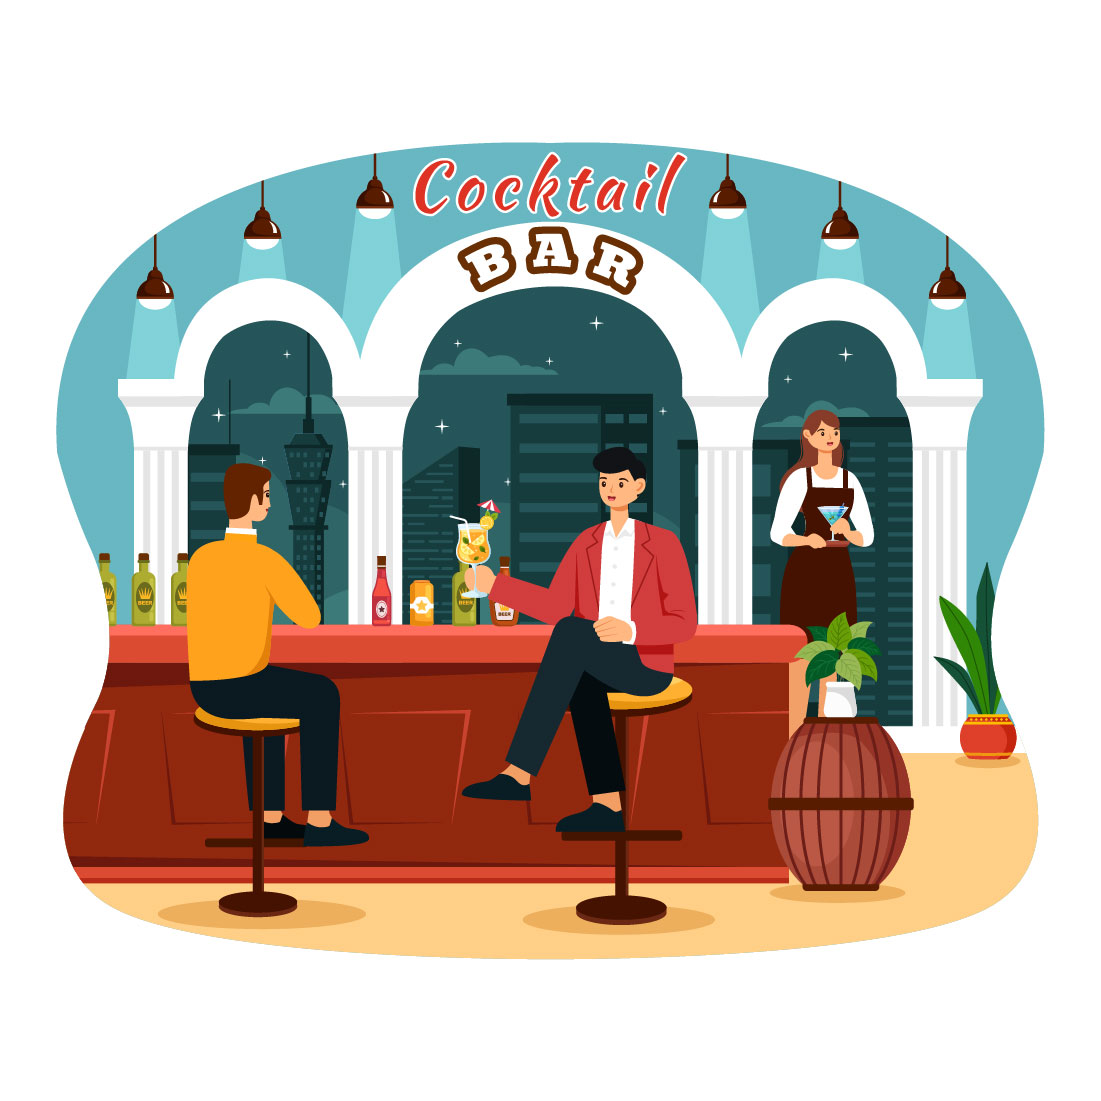 9 Cocktail Bar Illustration cover image.